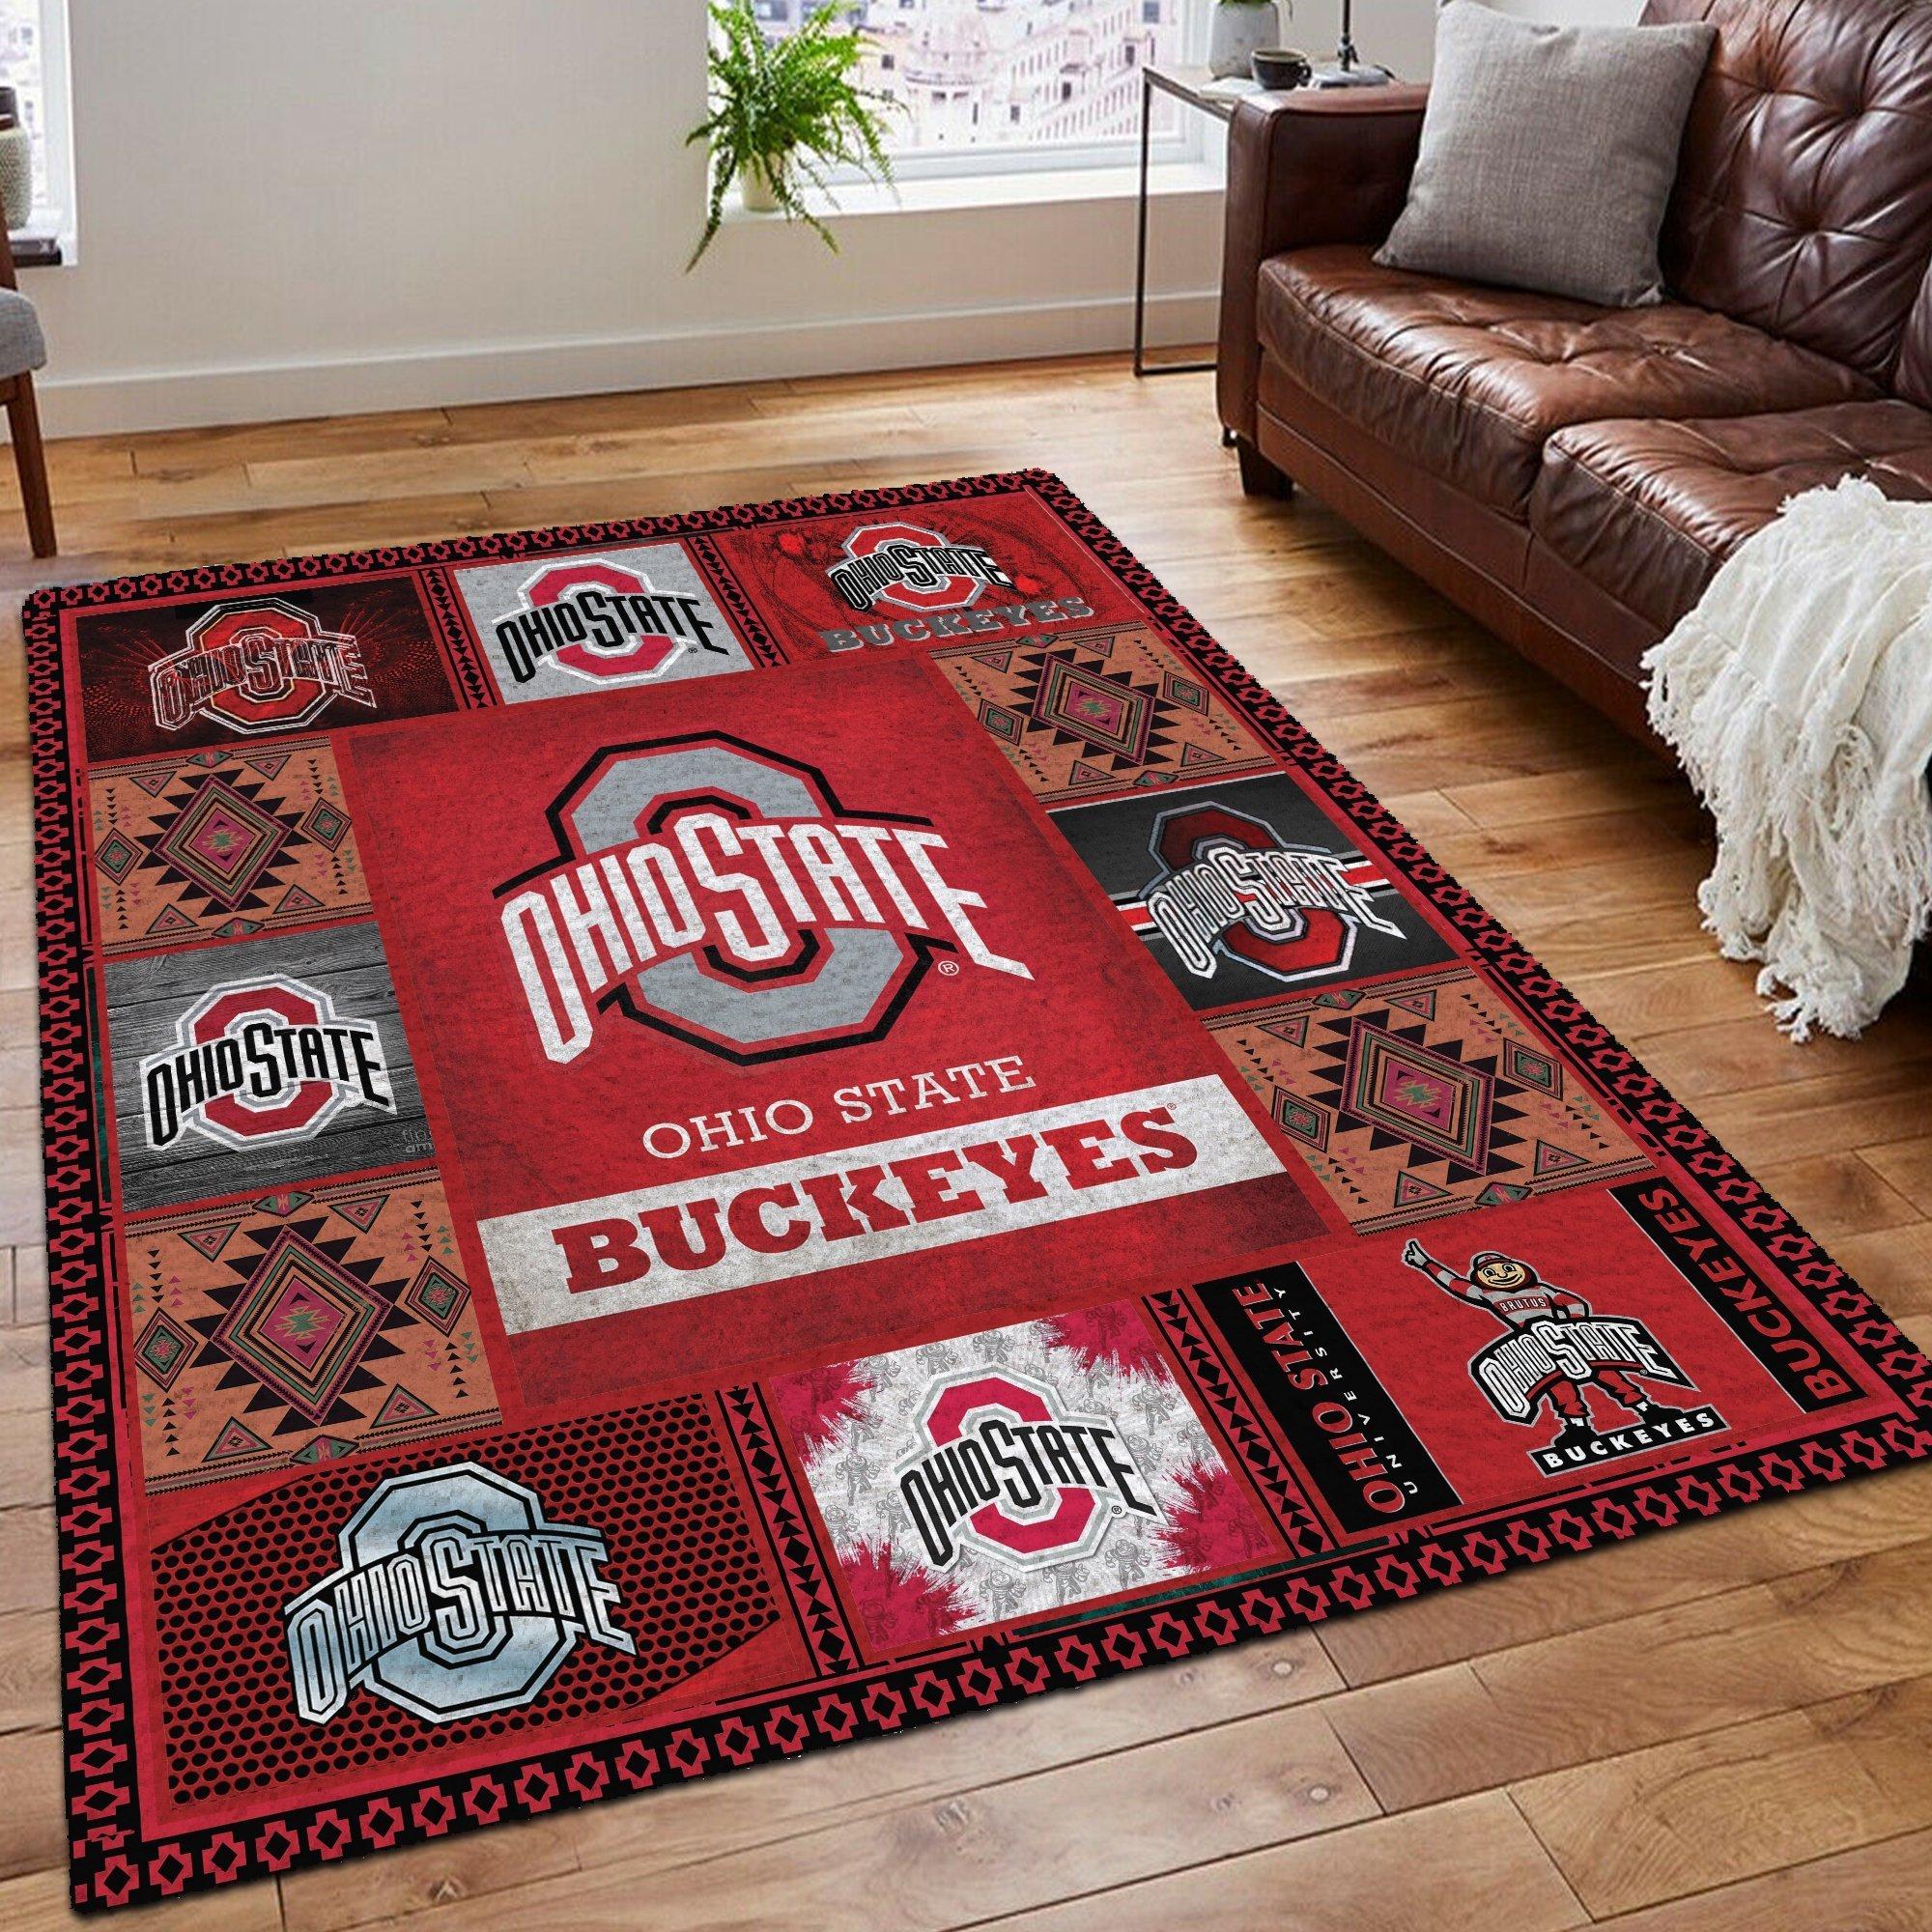 Ohio state buckeyes living room rug 1- maria